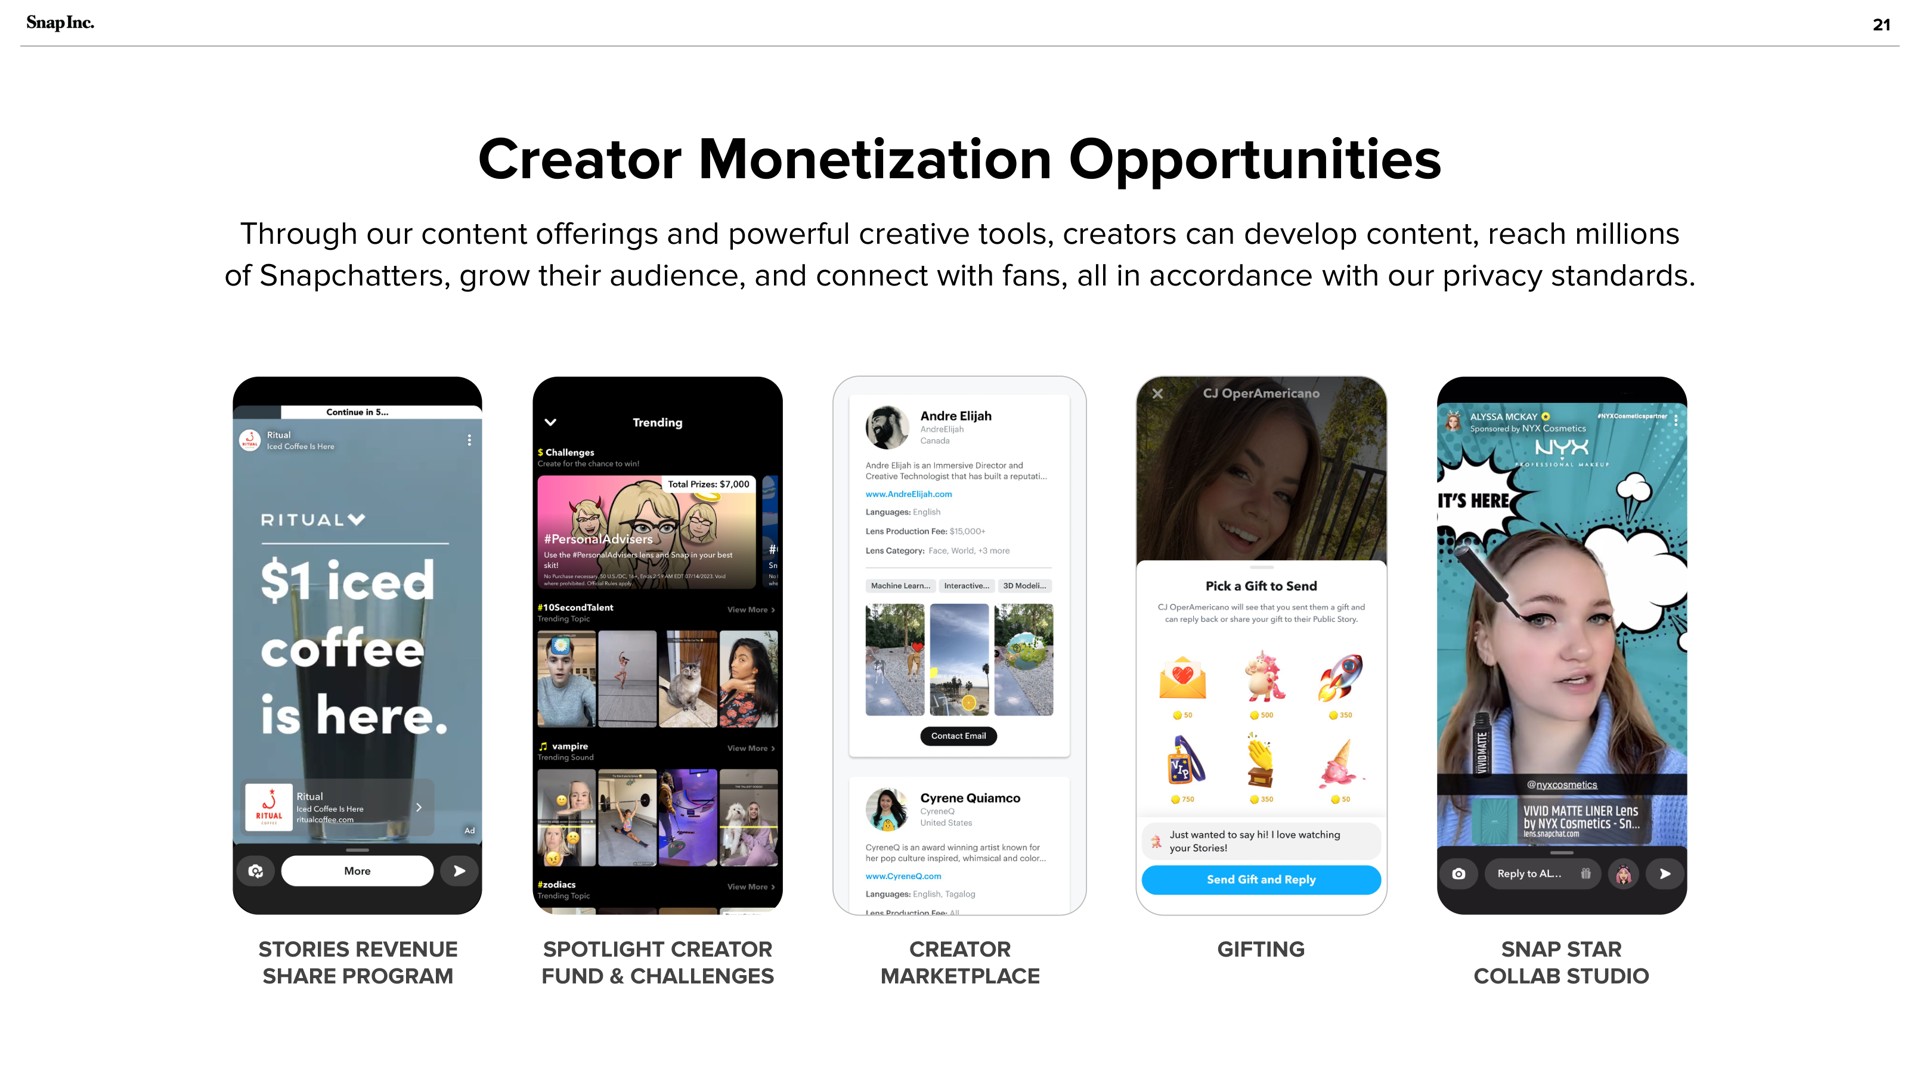 creator monetization opportunities sliced coffee | Snap Inc